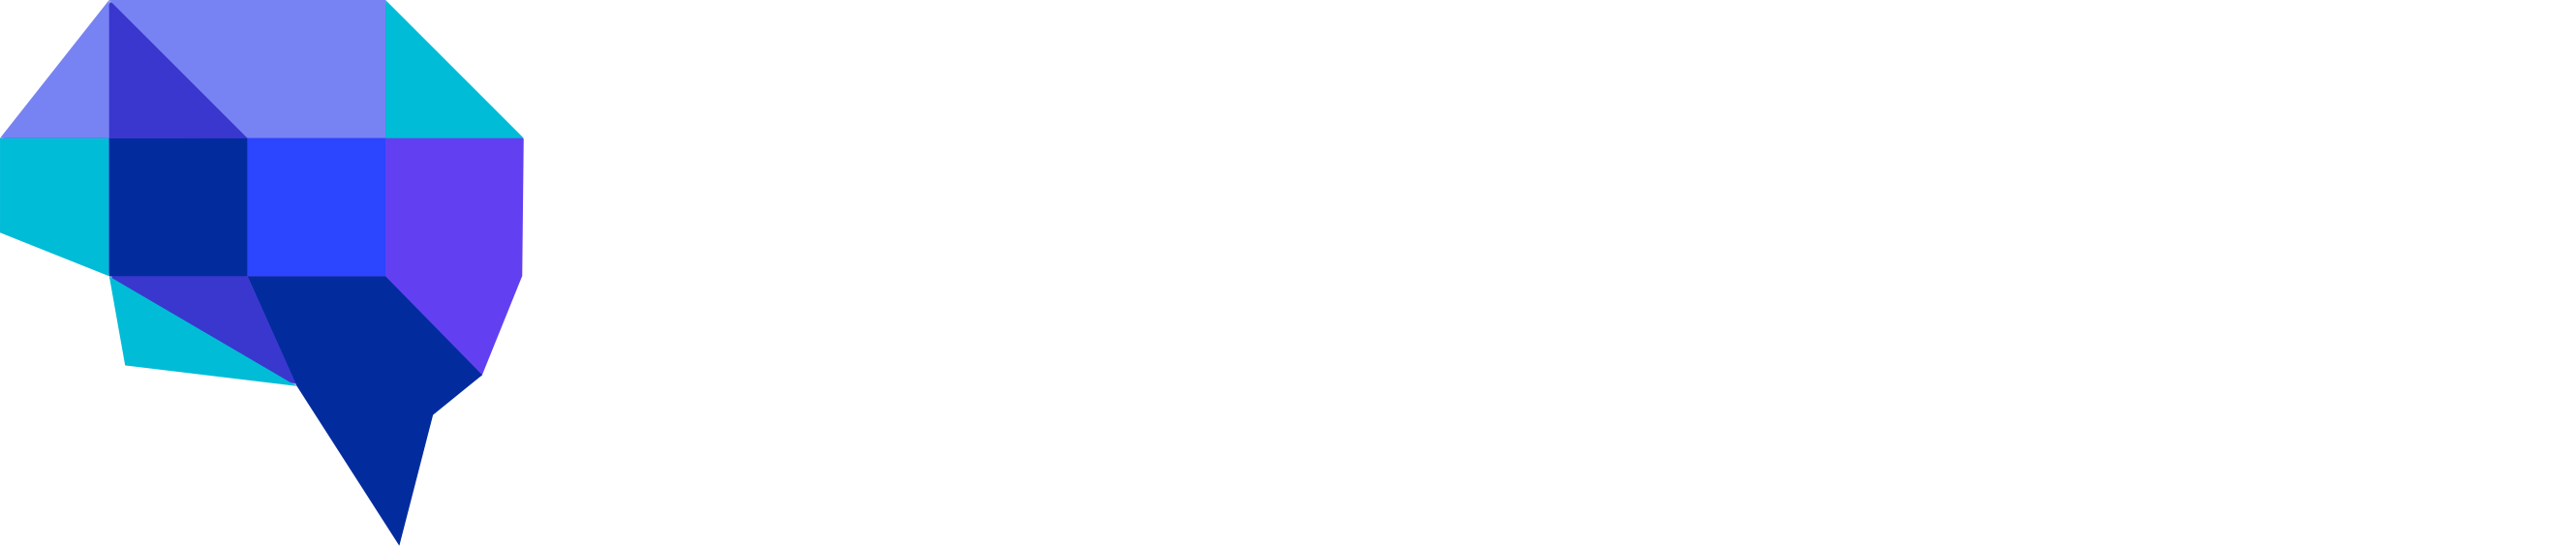 pymetrics logo white